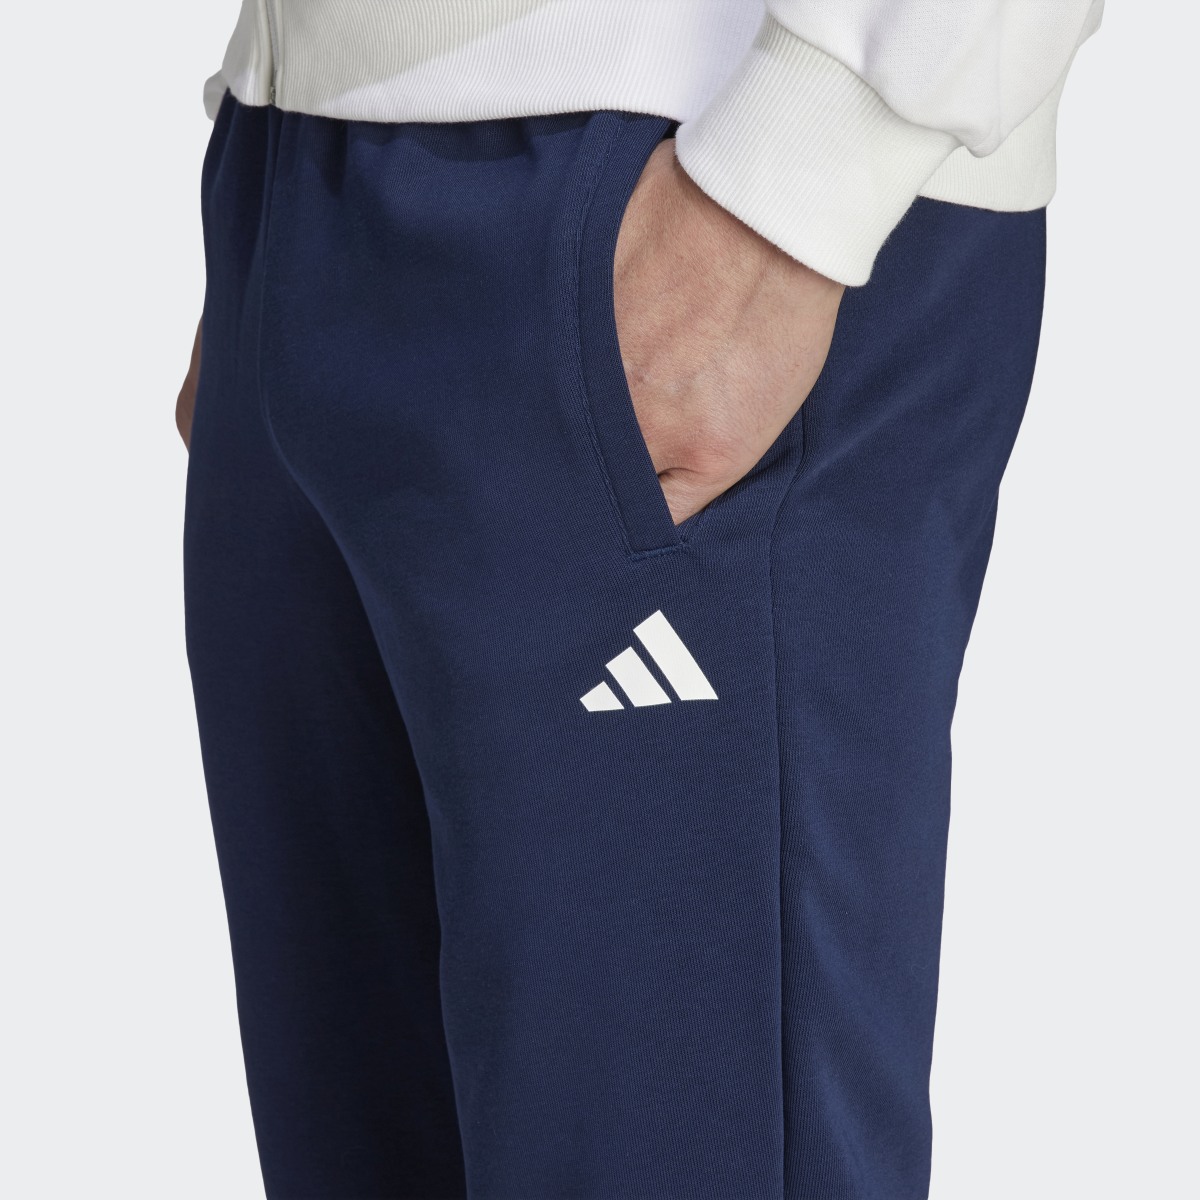 Adidas Club Teamwear Graphic Tennis Joggers. 6